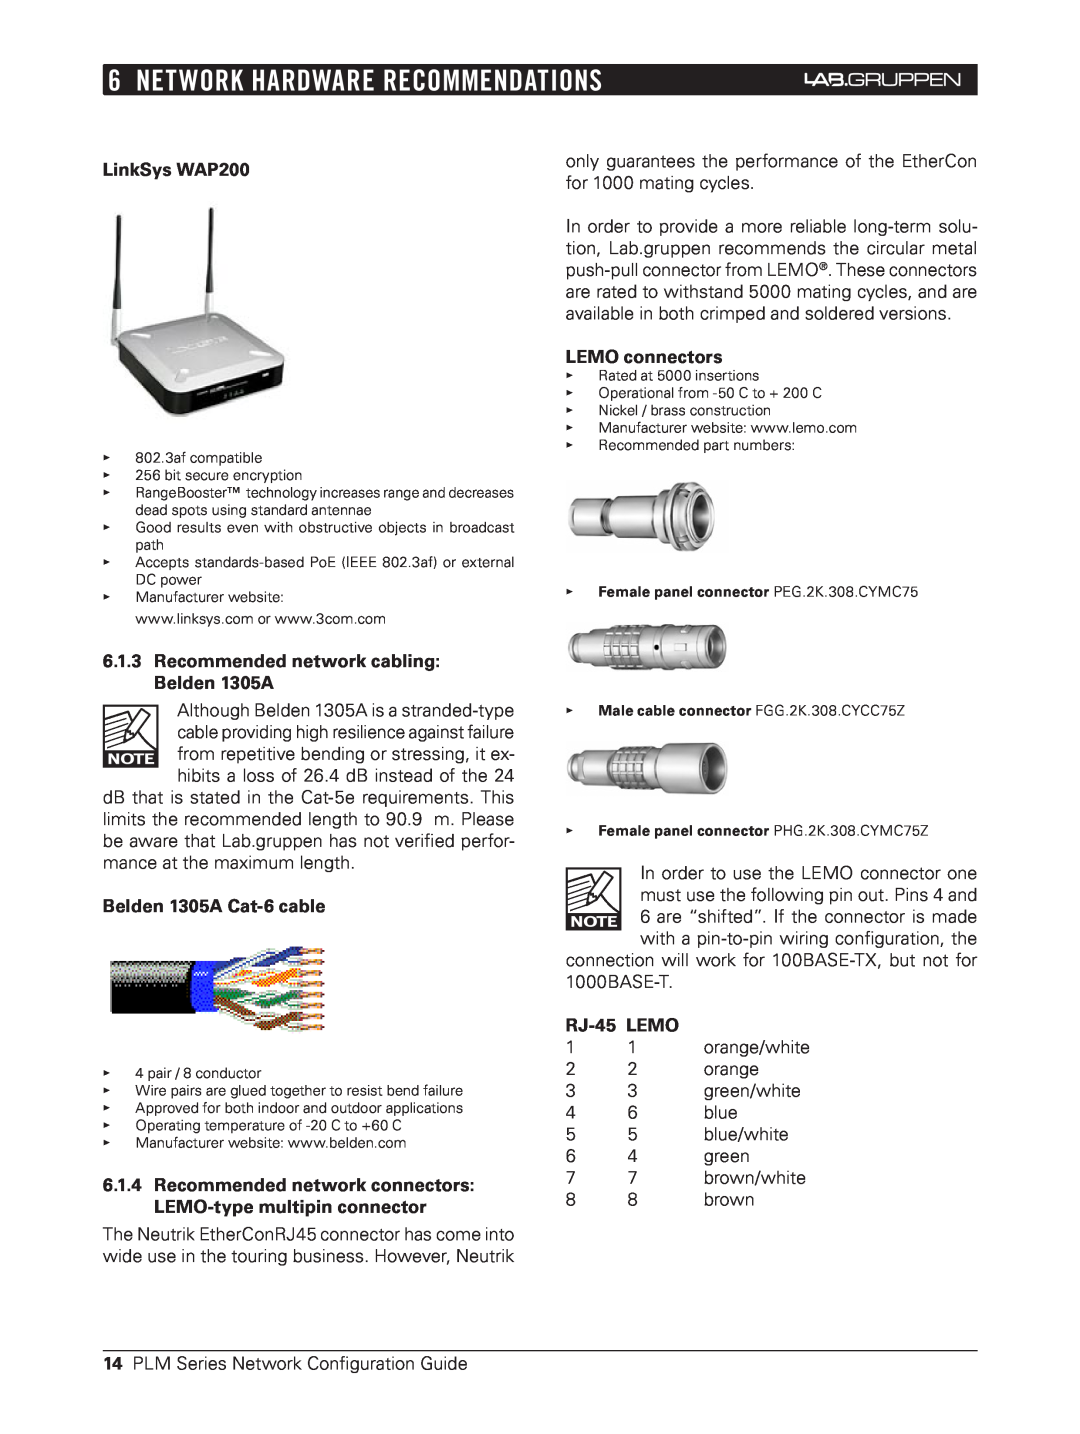 3Com PLM Series Network Hardware Recommendations, LinkSys WAP200, 6.1.3Recommended network cabling Belden 1305A, RJ-45LEMO 